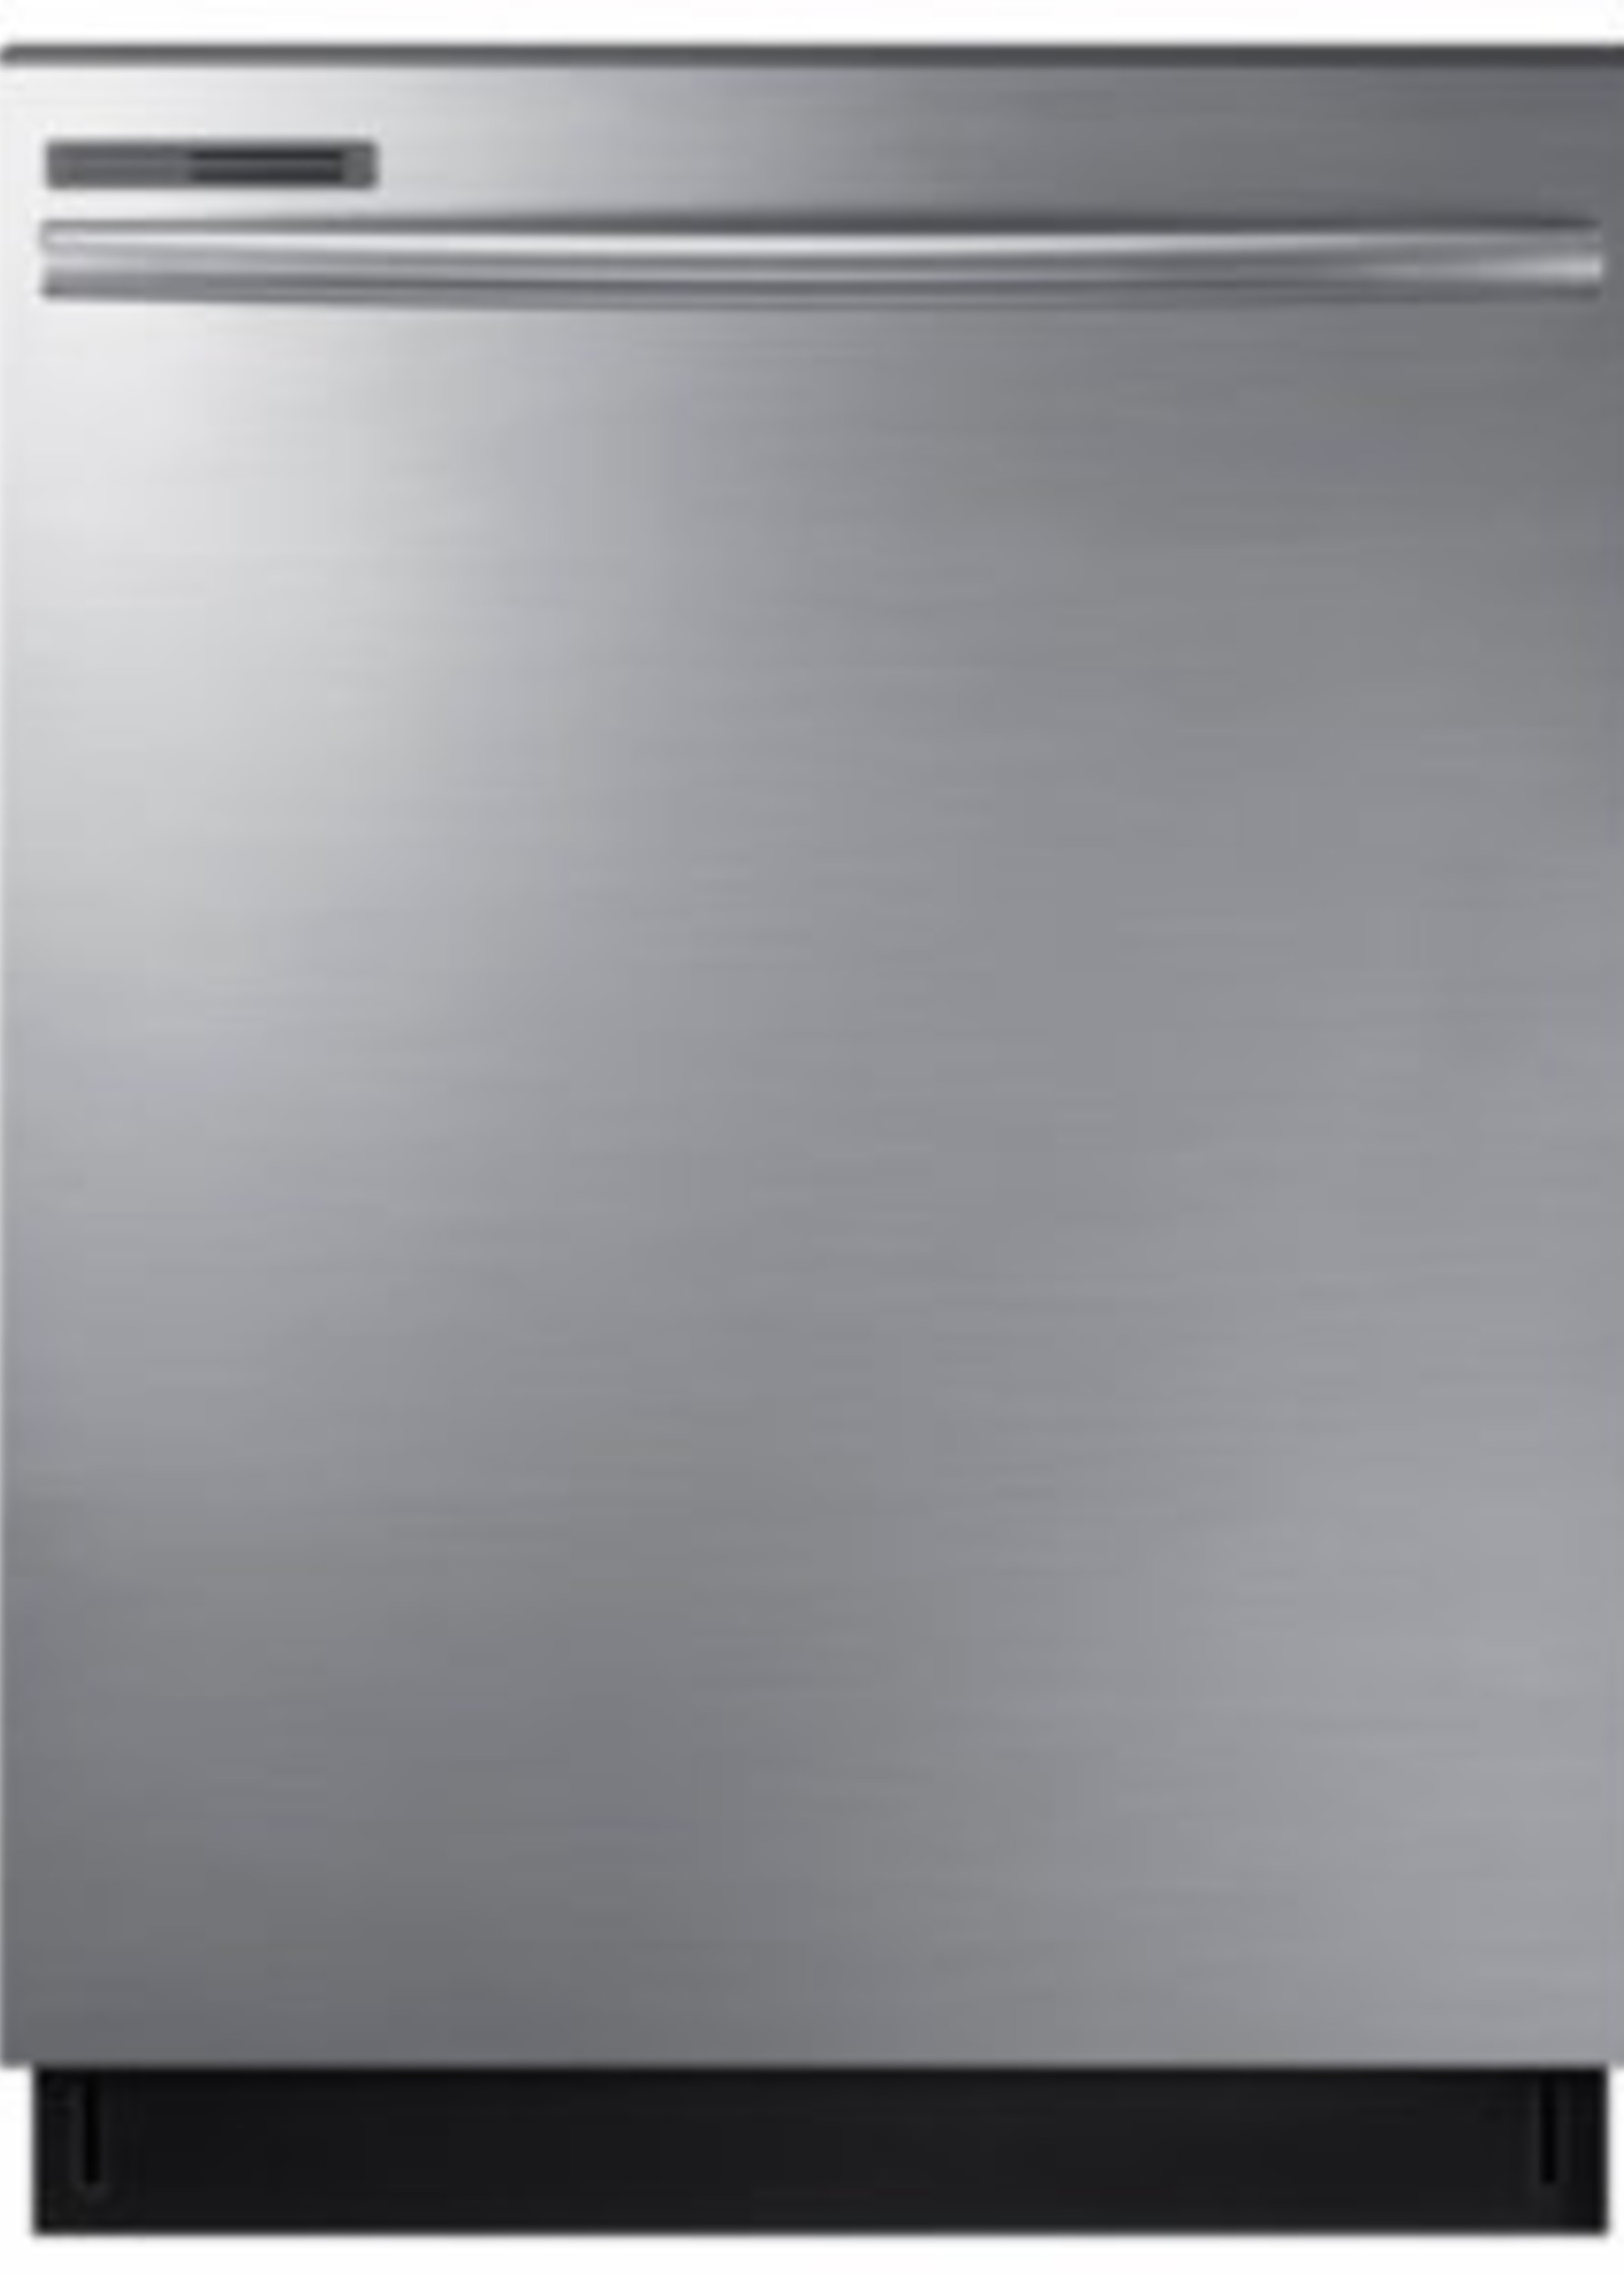 Samsung * Samsung  DW80M2020US   Top Control 24-in Built-In Dishwasher (Stainless Steel) ENERGY STAR 55-Decibel